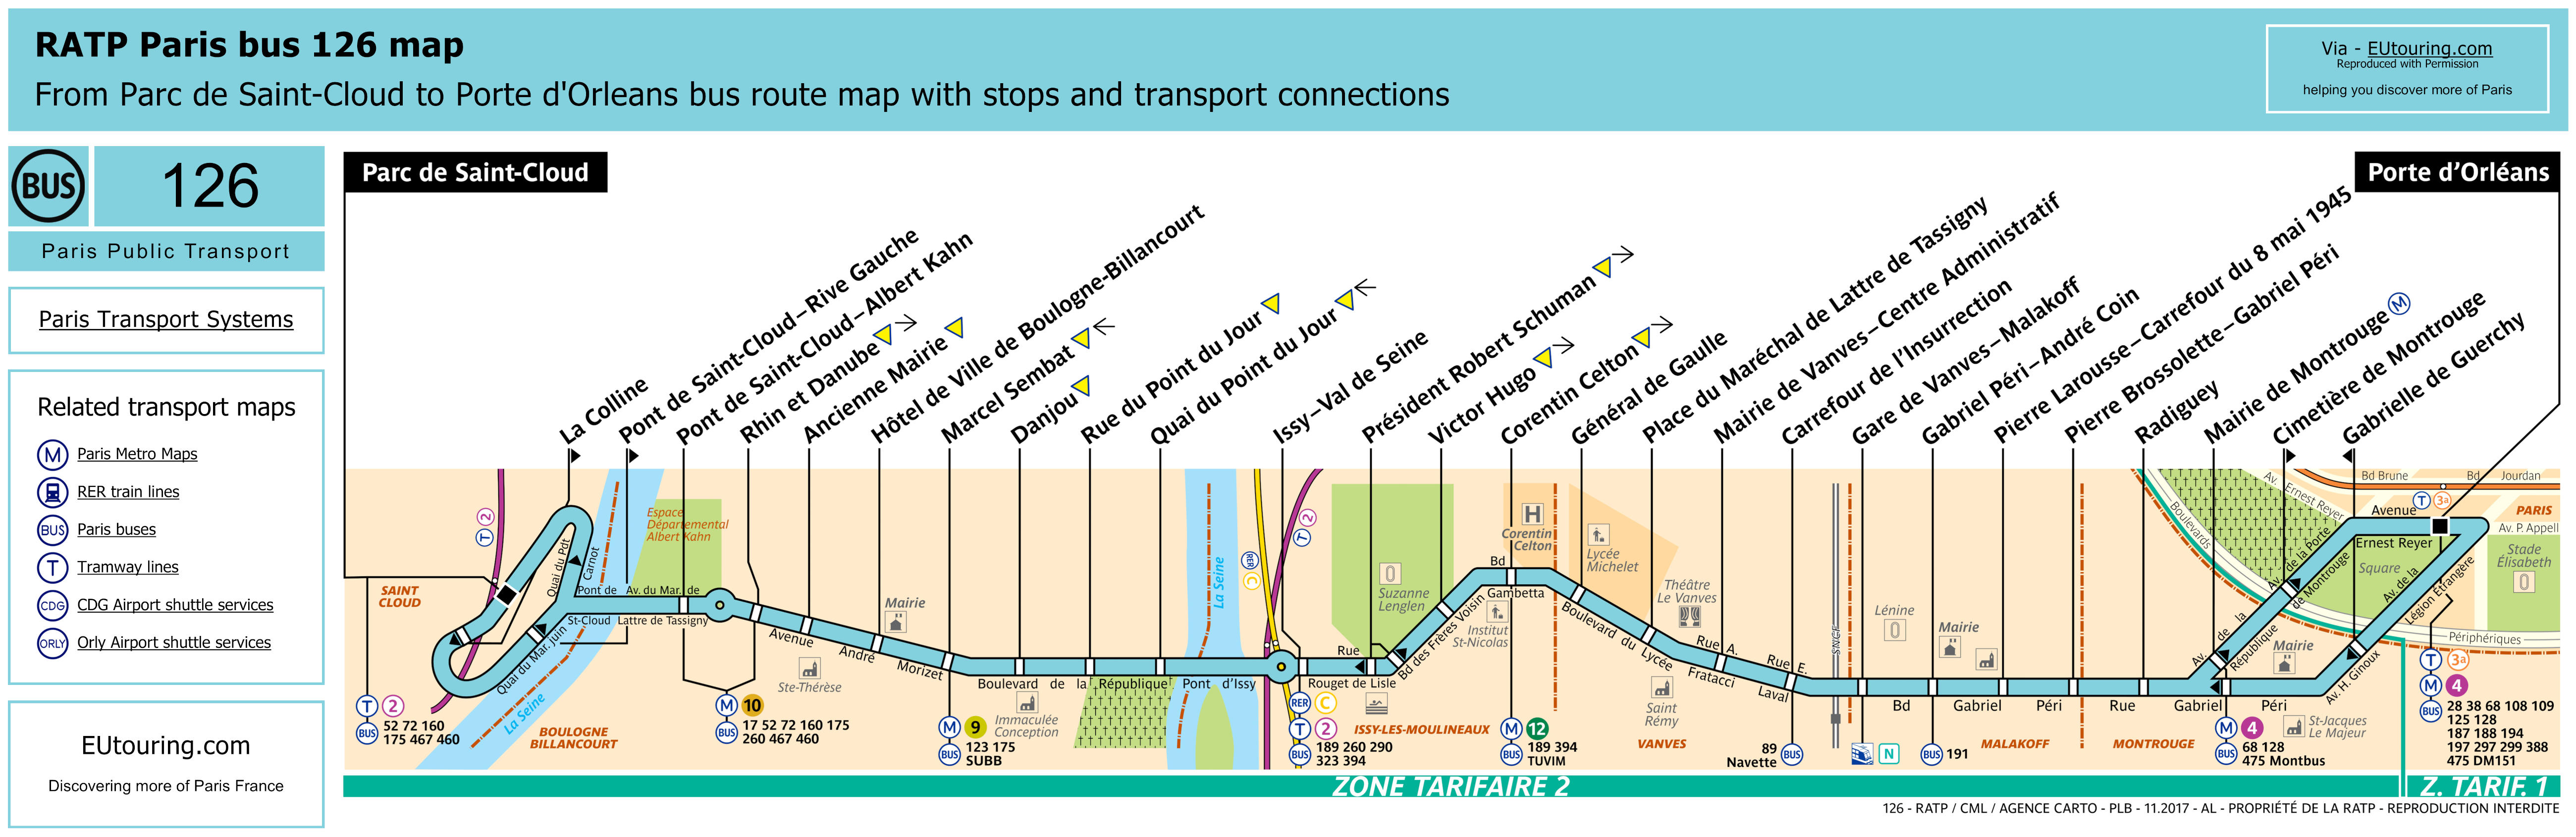 ratp route maps for paris bus lines 120 through to 129